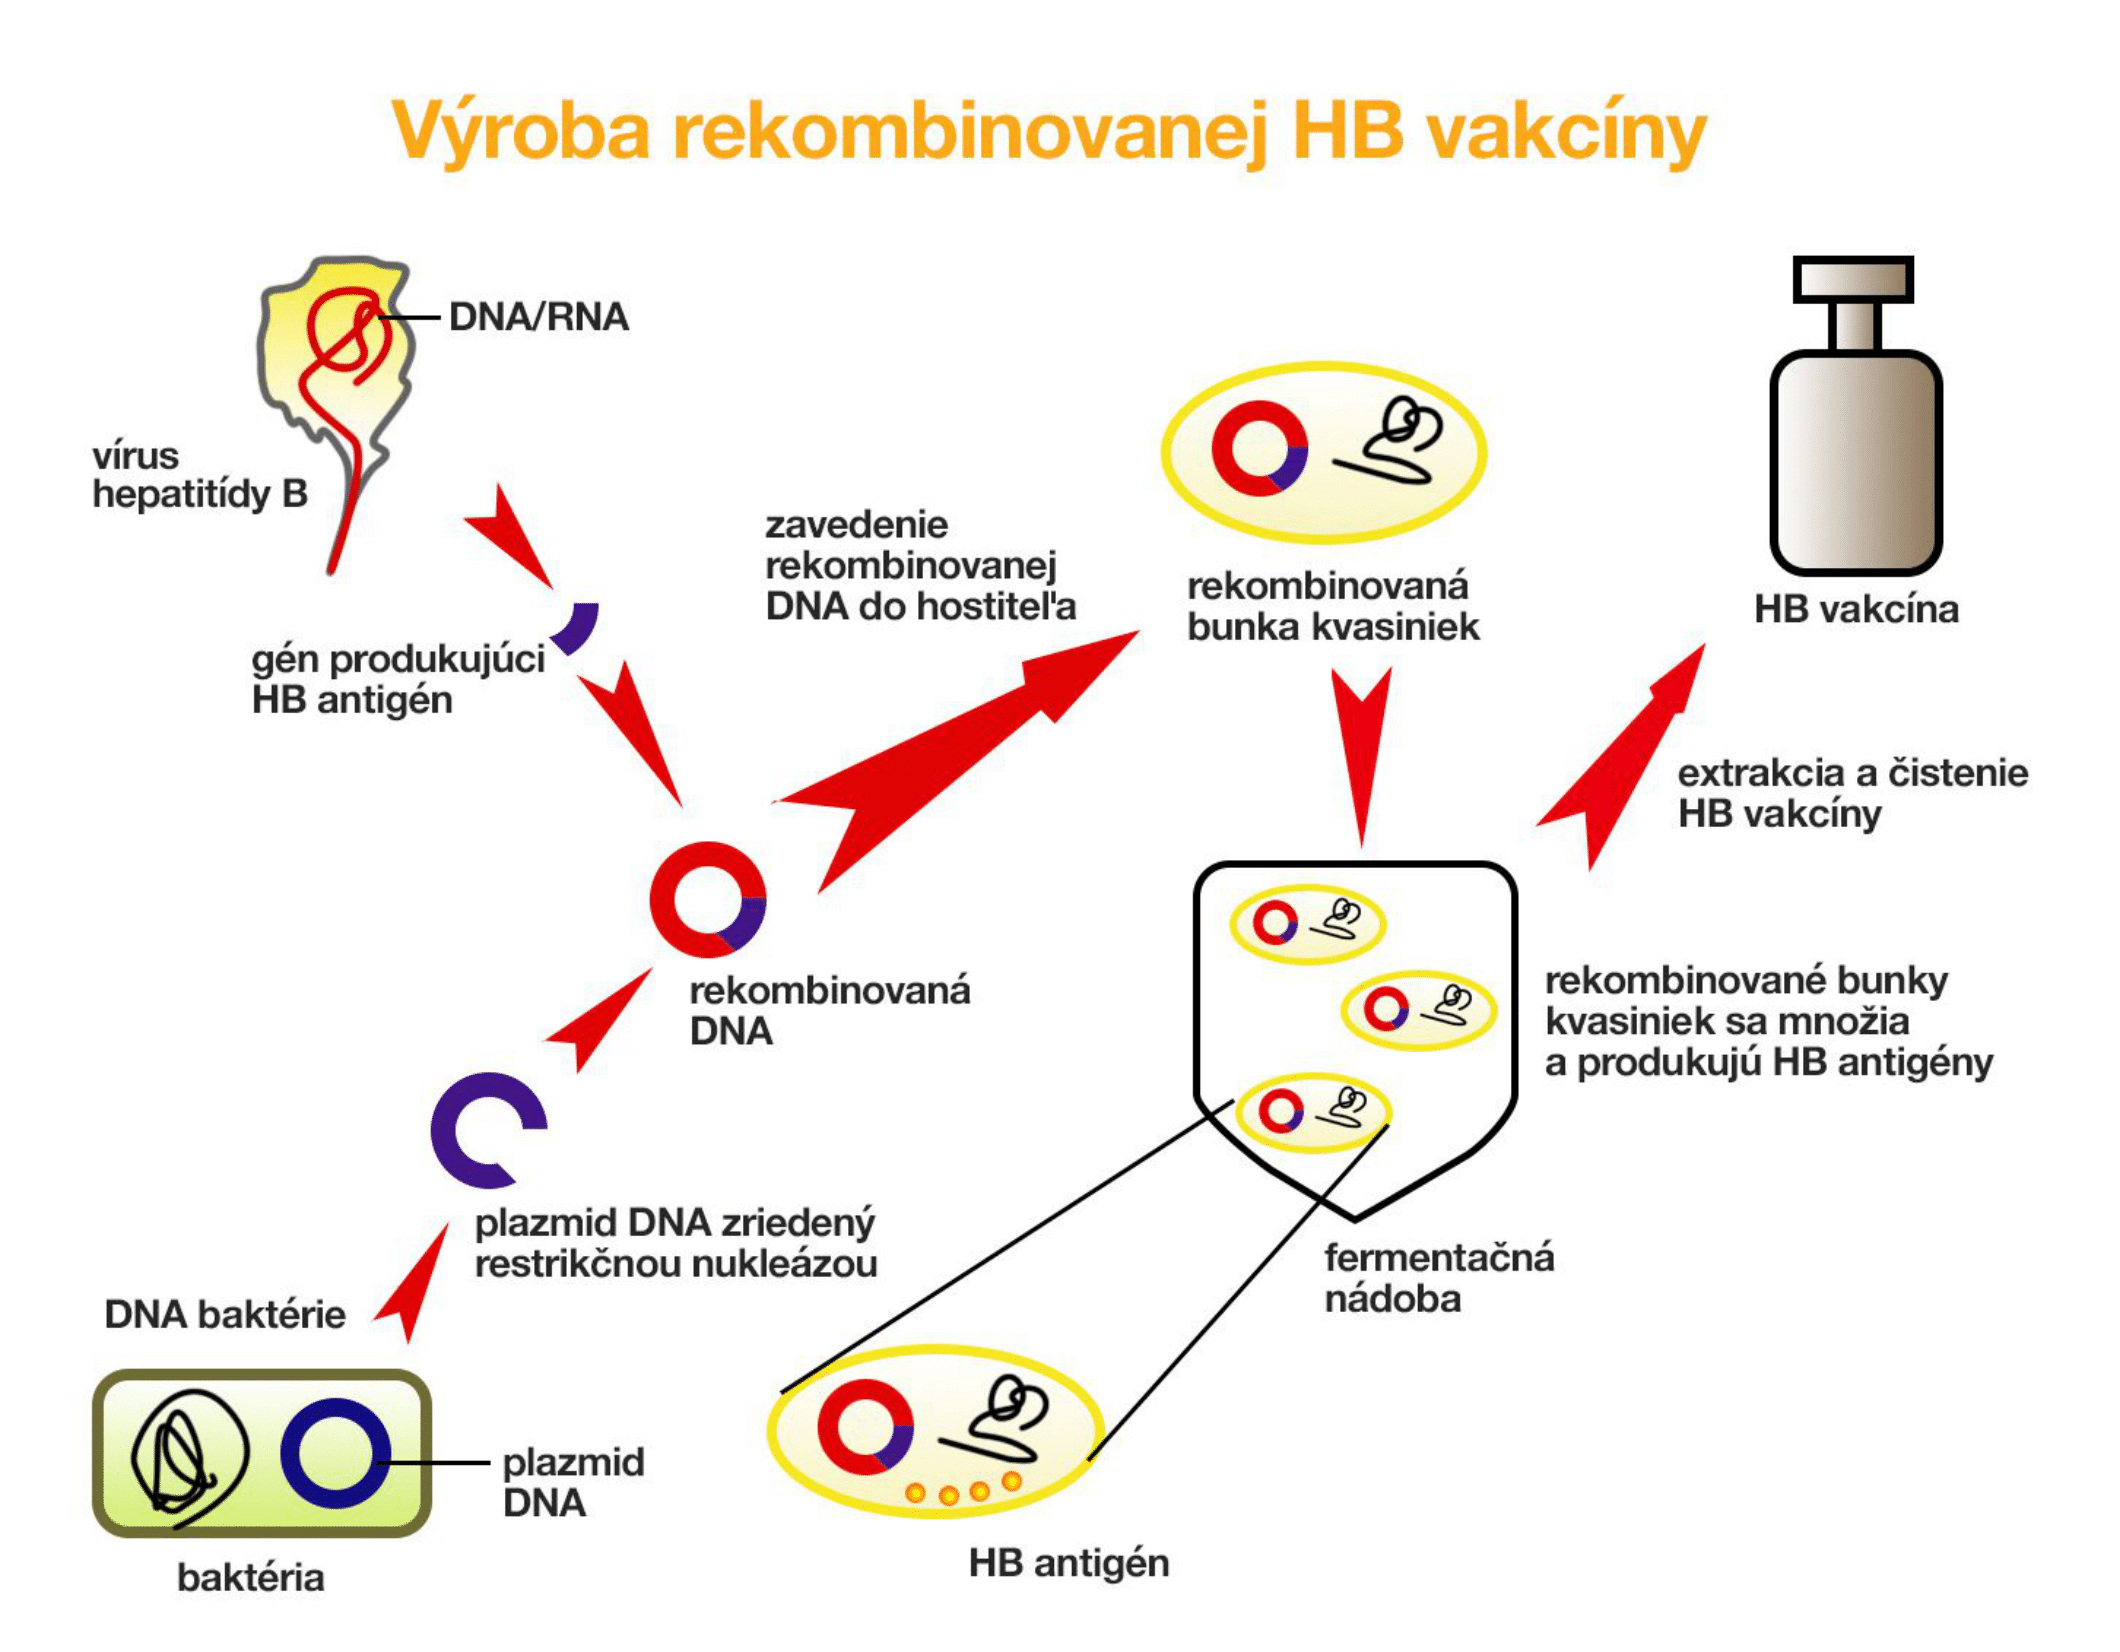 vyroba rekombinovanej HB vakciny